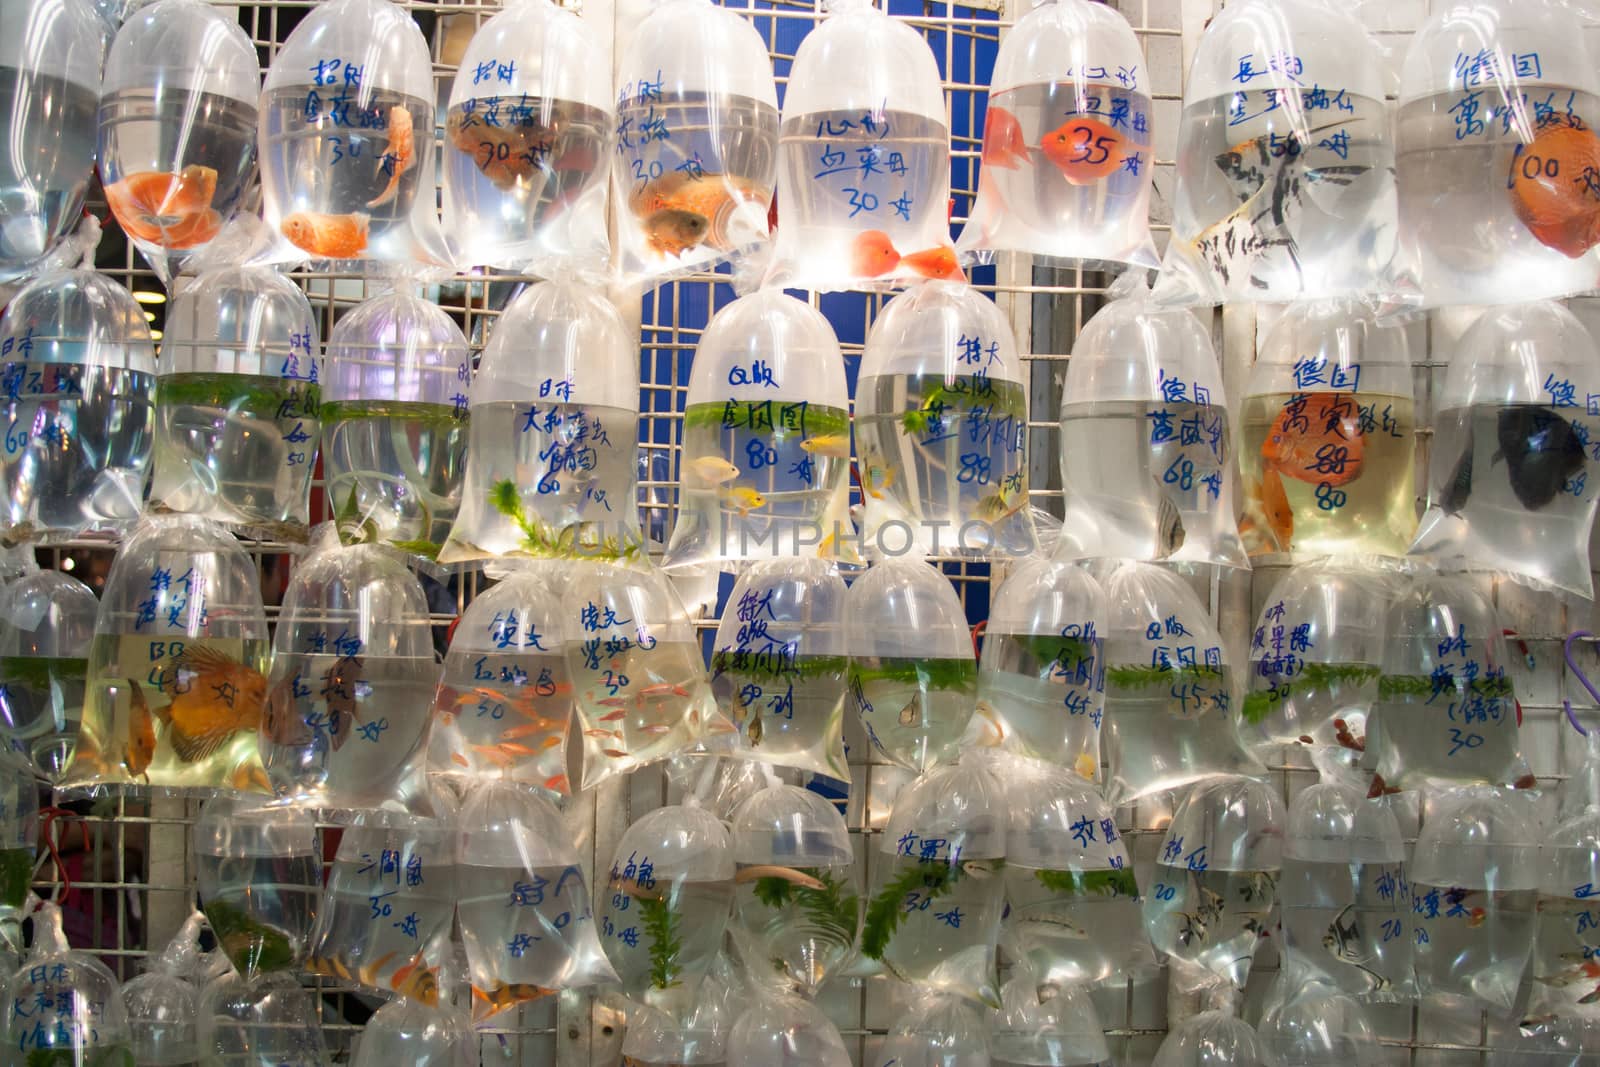 Fish for Sale by kiankhoon